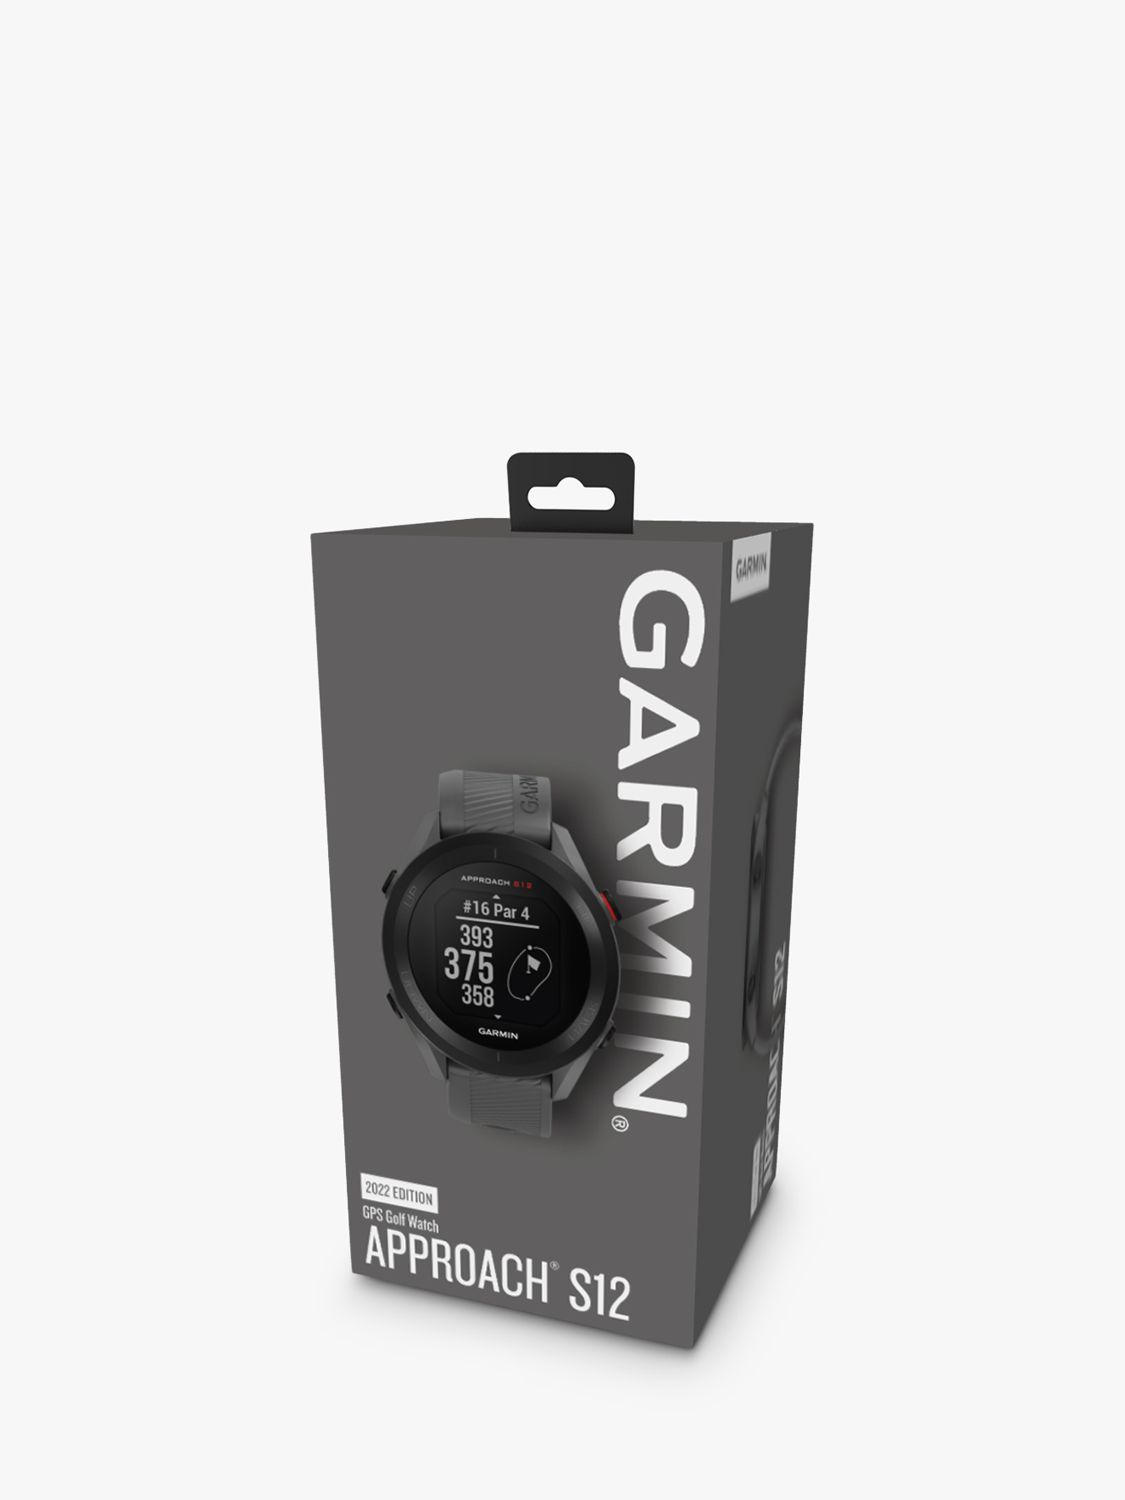 Slate GPS, Watch S12 (2022 Approach Golf with Edition) Grey Garmin